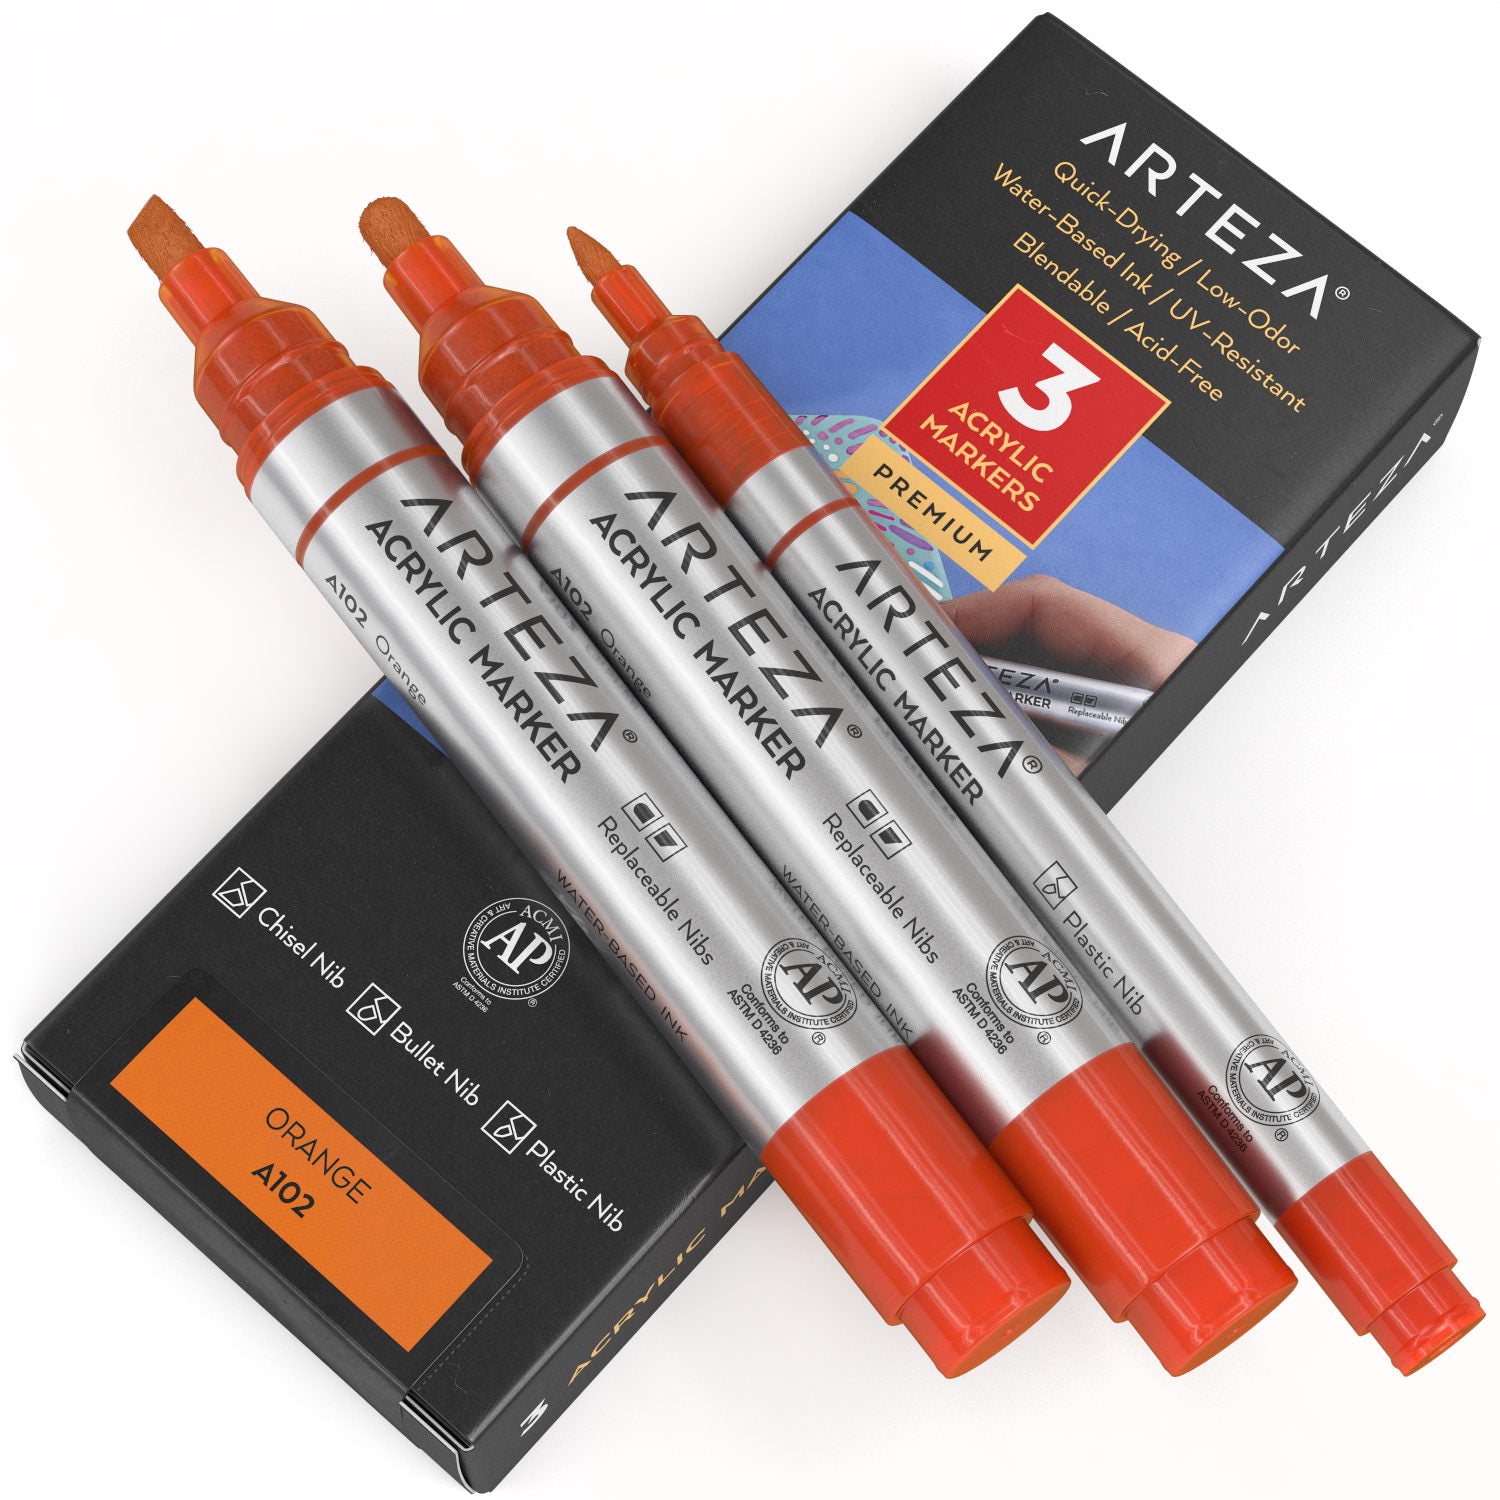 Acrylic Paint Markers, Set of 40 Colors, Long-Lasting Paint Pens